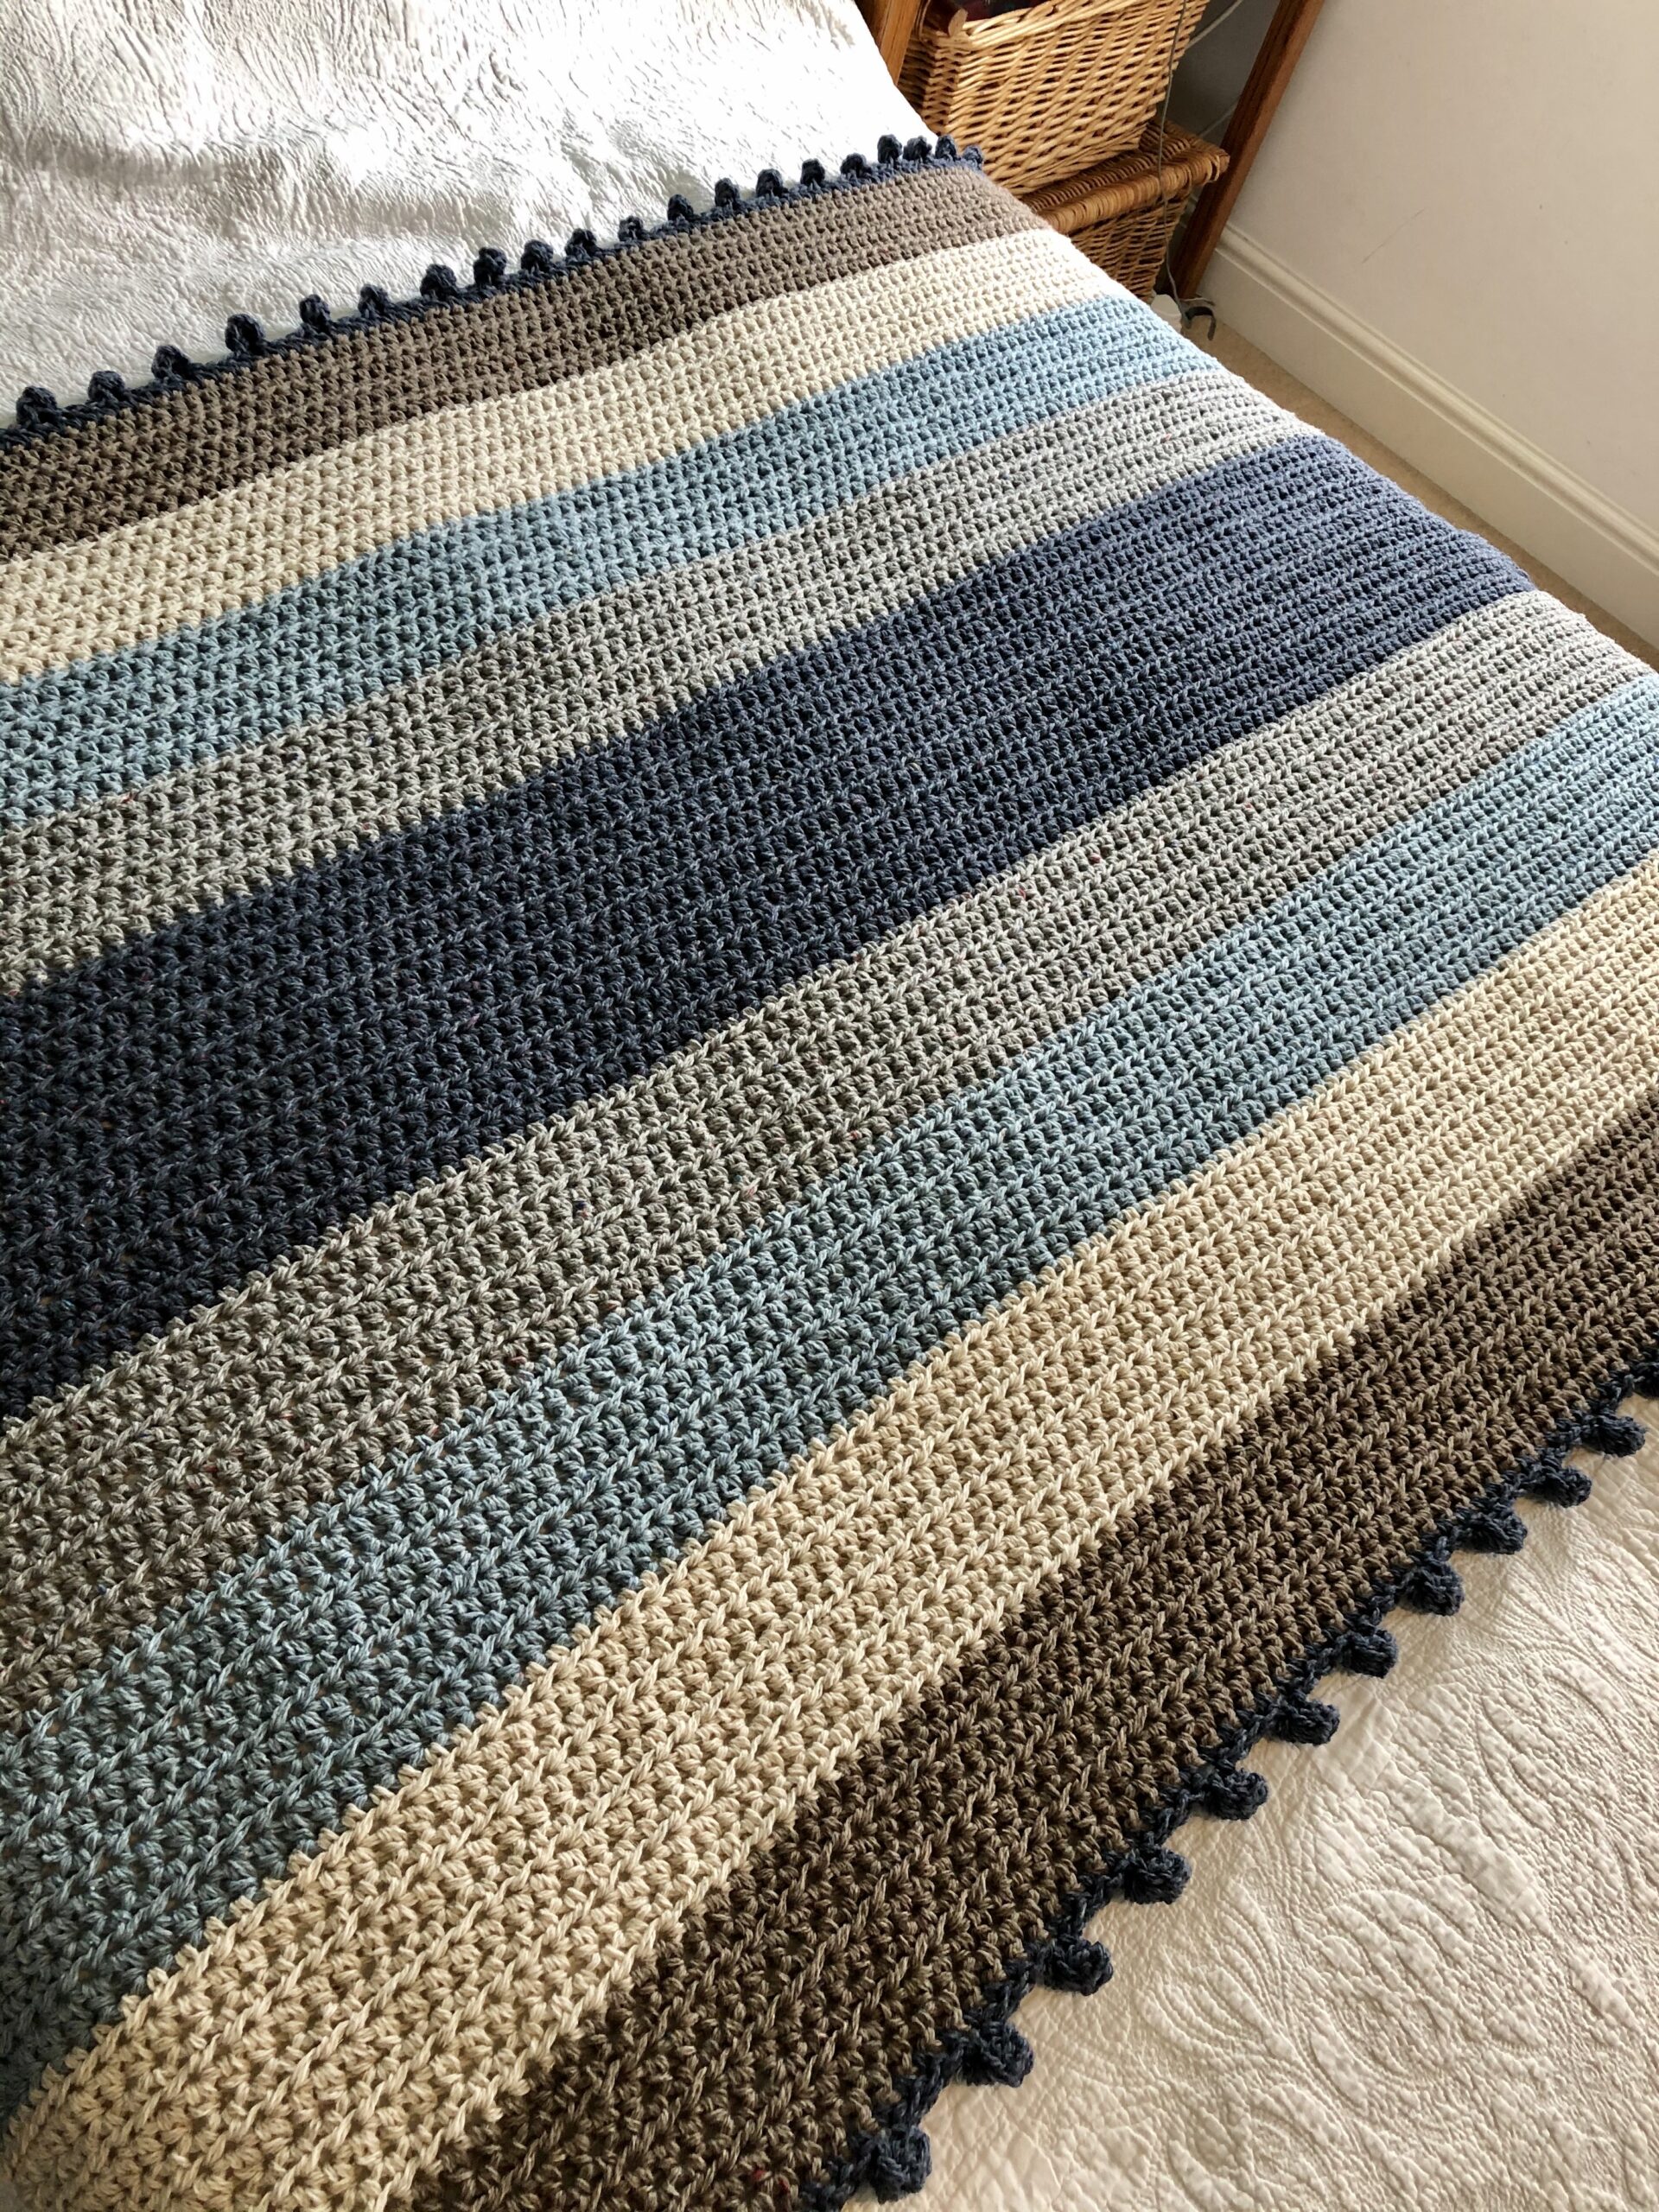 Blue Hues striped blanket.